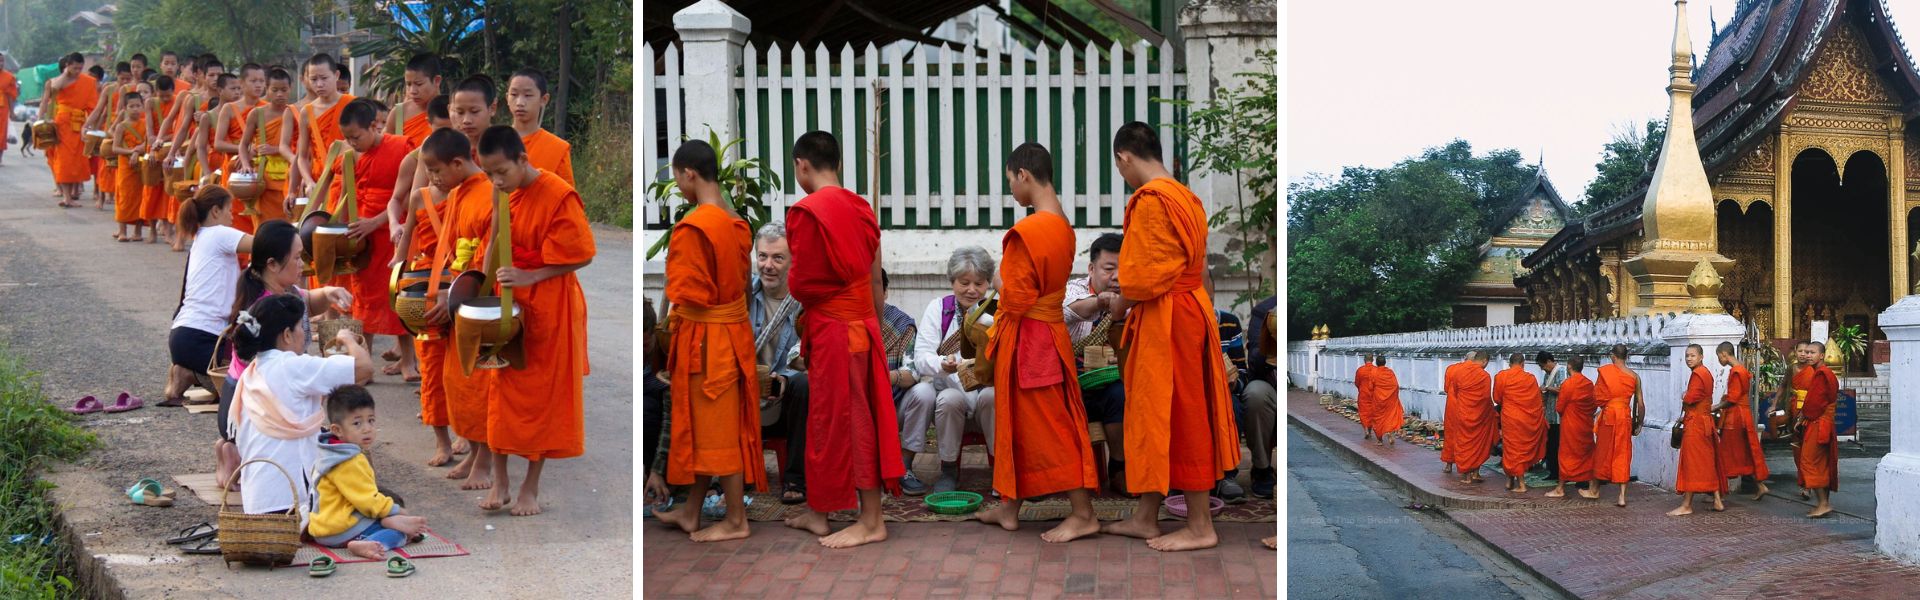 La cerimonia di Tak Bat in Laos